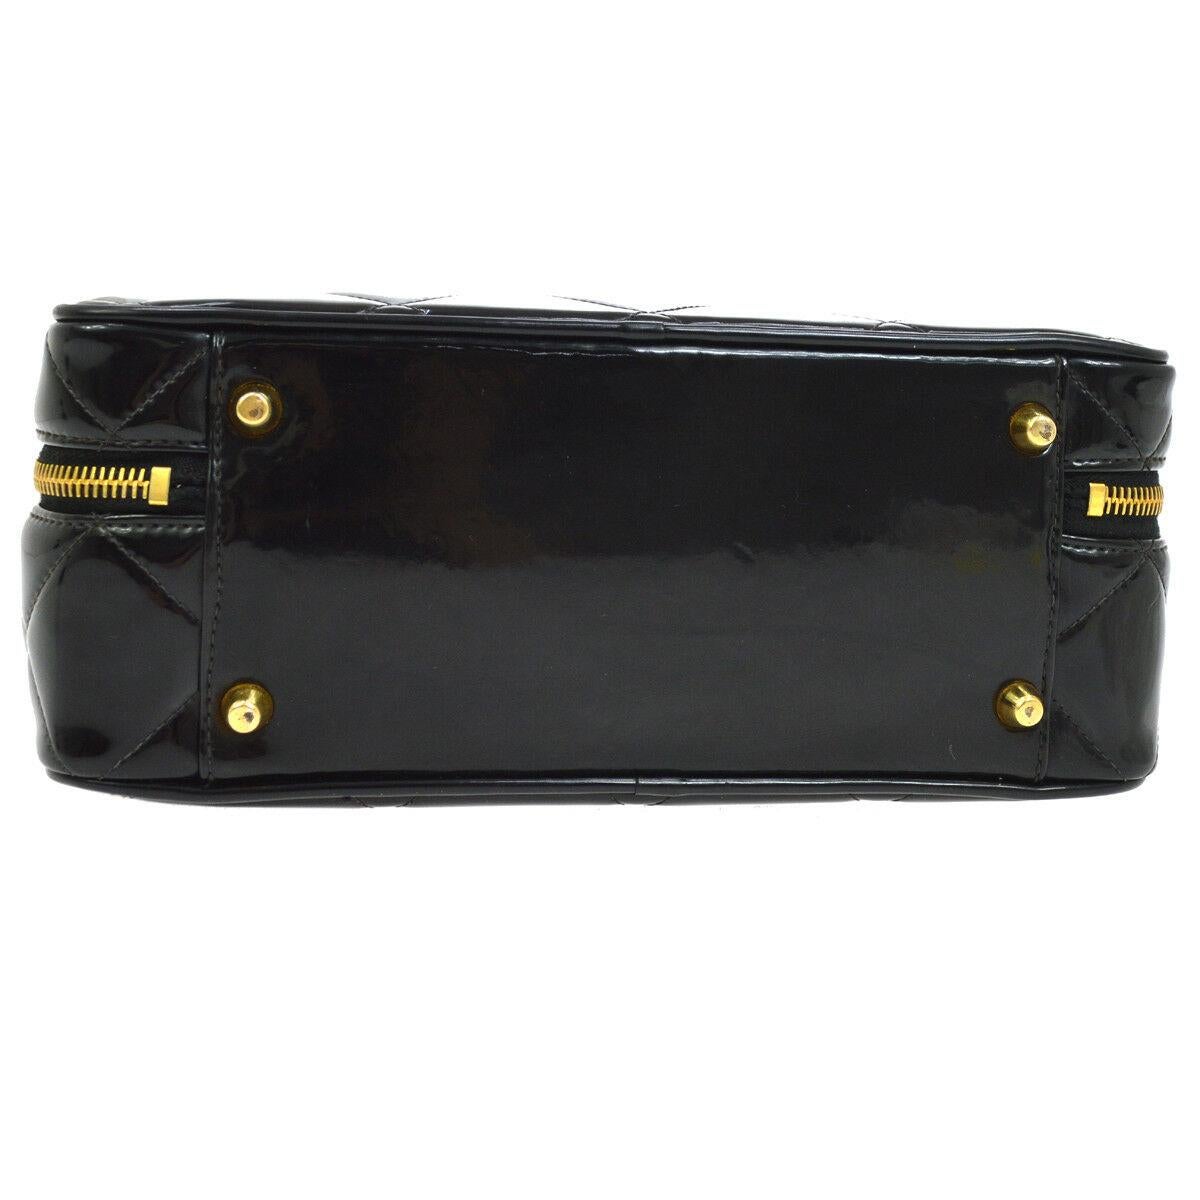 Chanel Black Patent Leather Lunch Travel Top Handle Satchel Tote Shoulder Bag 1